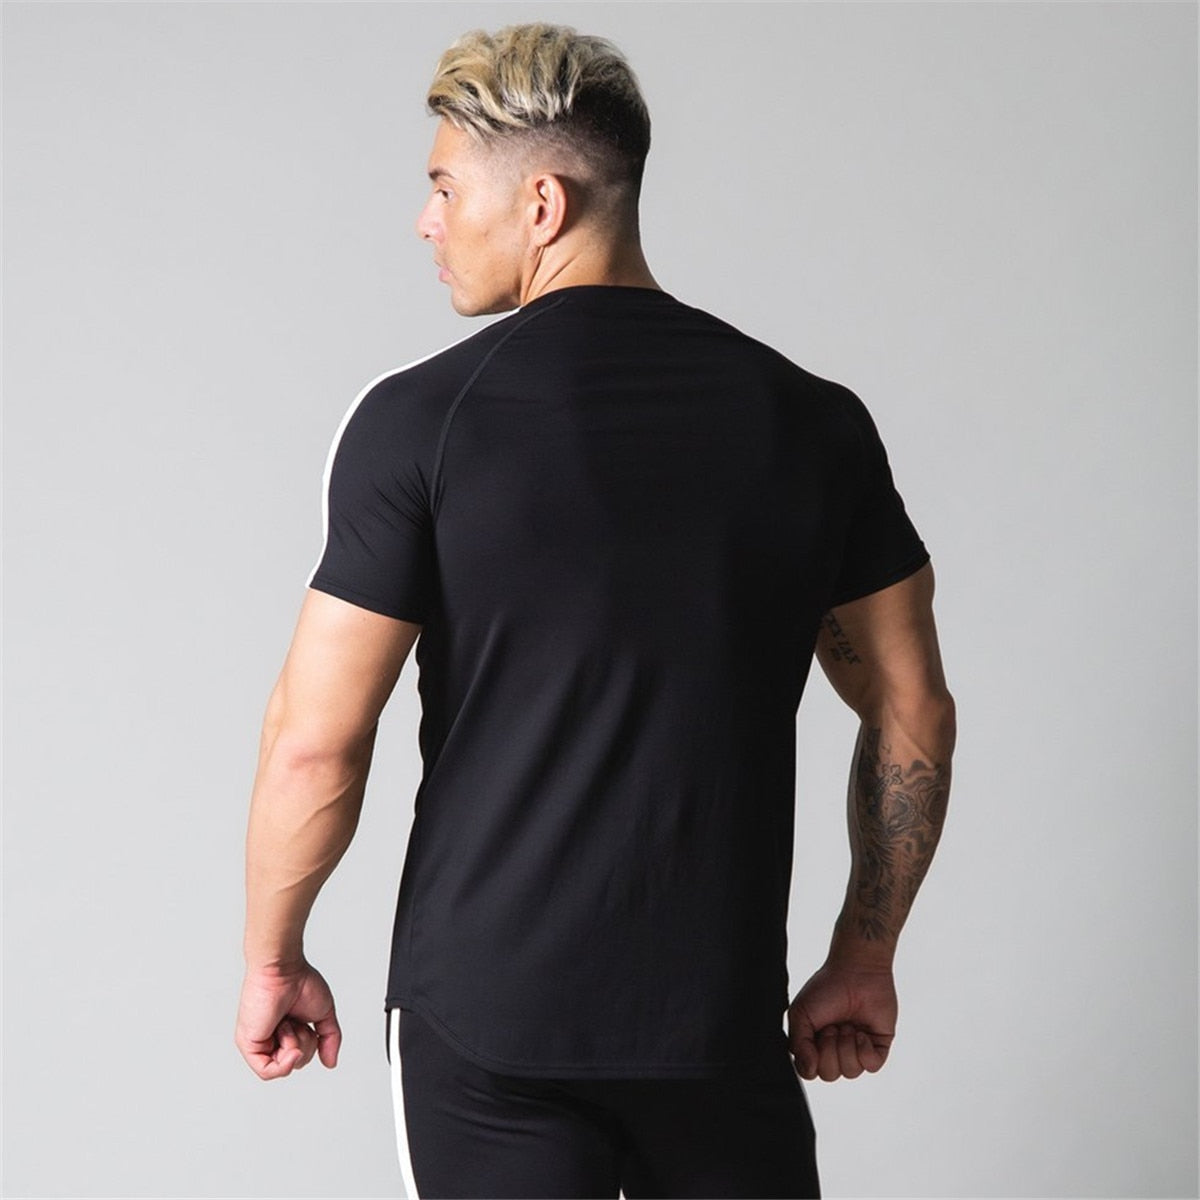 Black Gym Fitness T-shirt Men Running Sport Skinny Shirt Short Sleeve Cotton Tee Tops Summer Male Bodybuilding Training Clothing